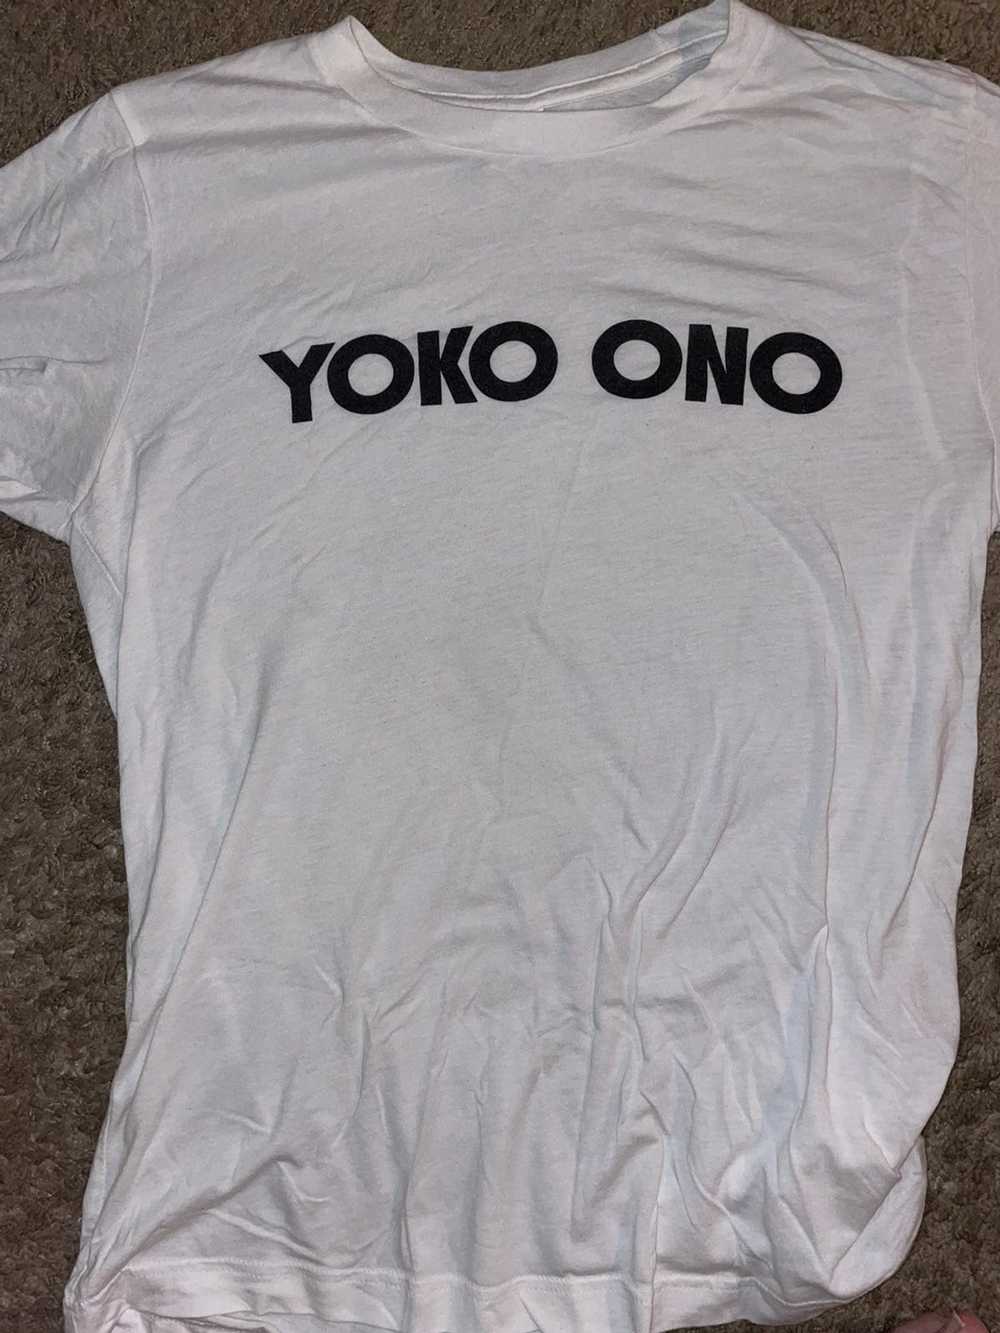 Canvas Yoko Ono t shirt - image 1